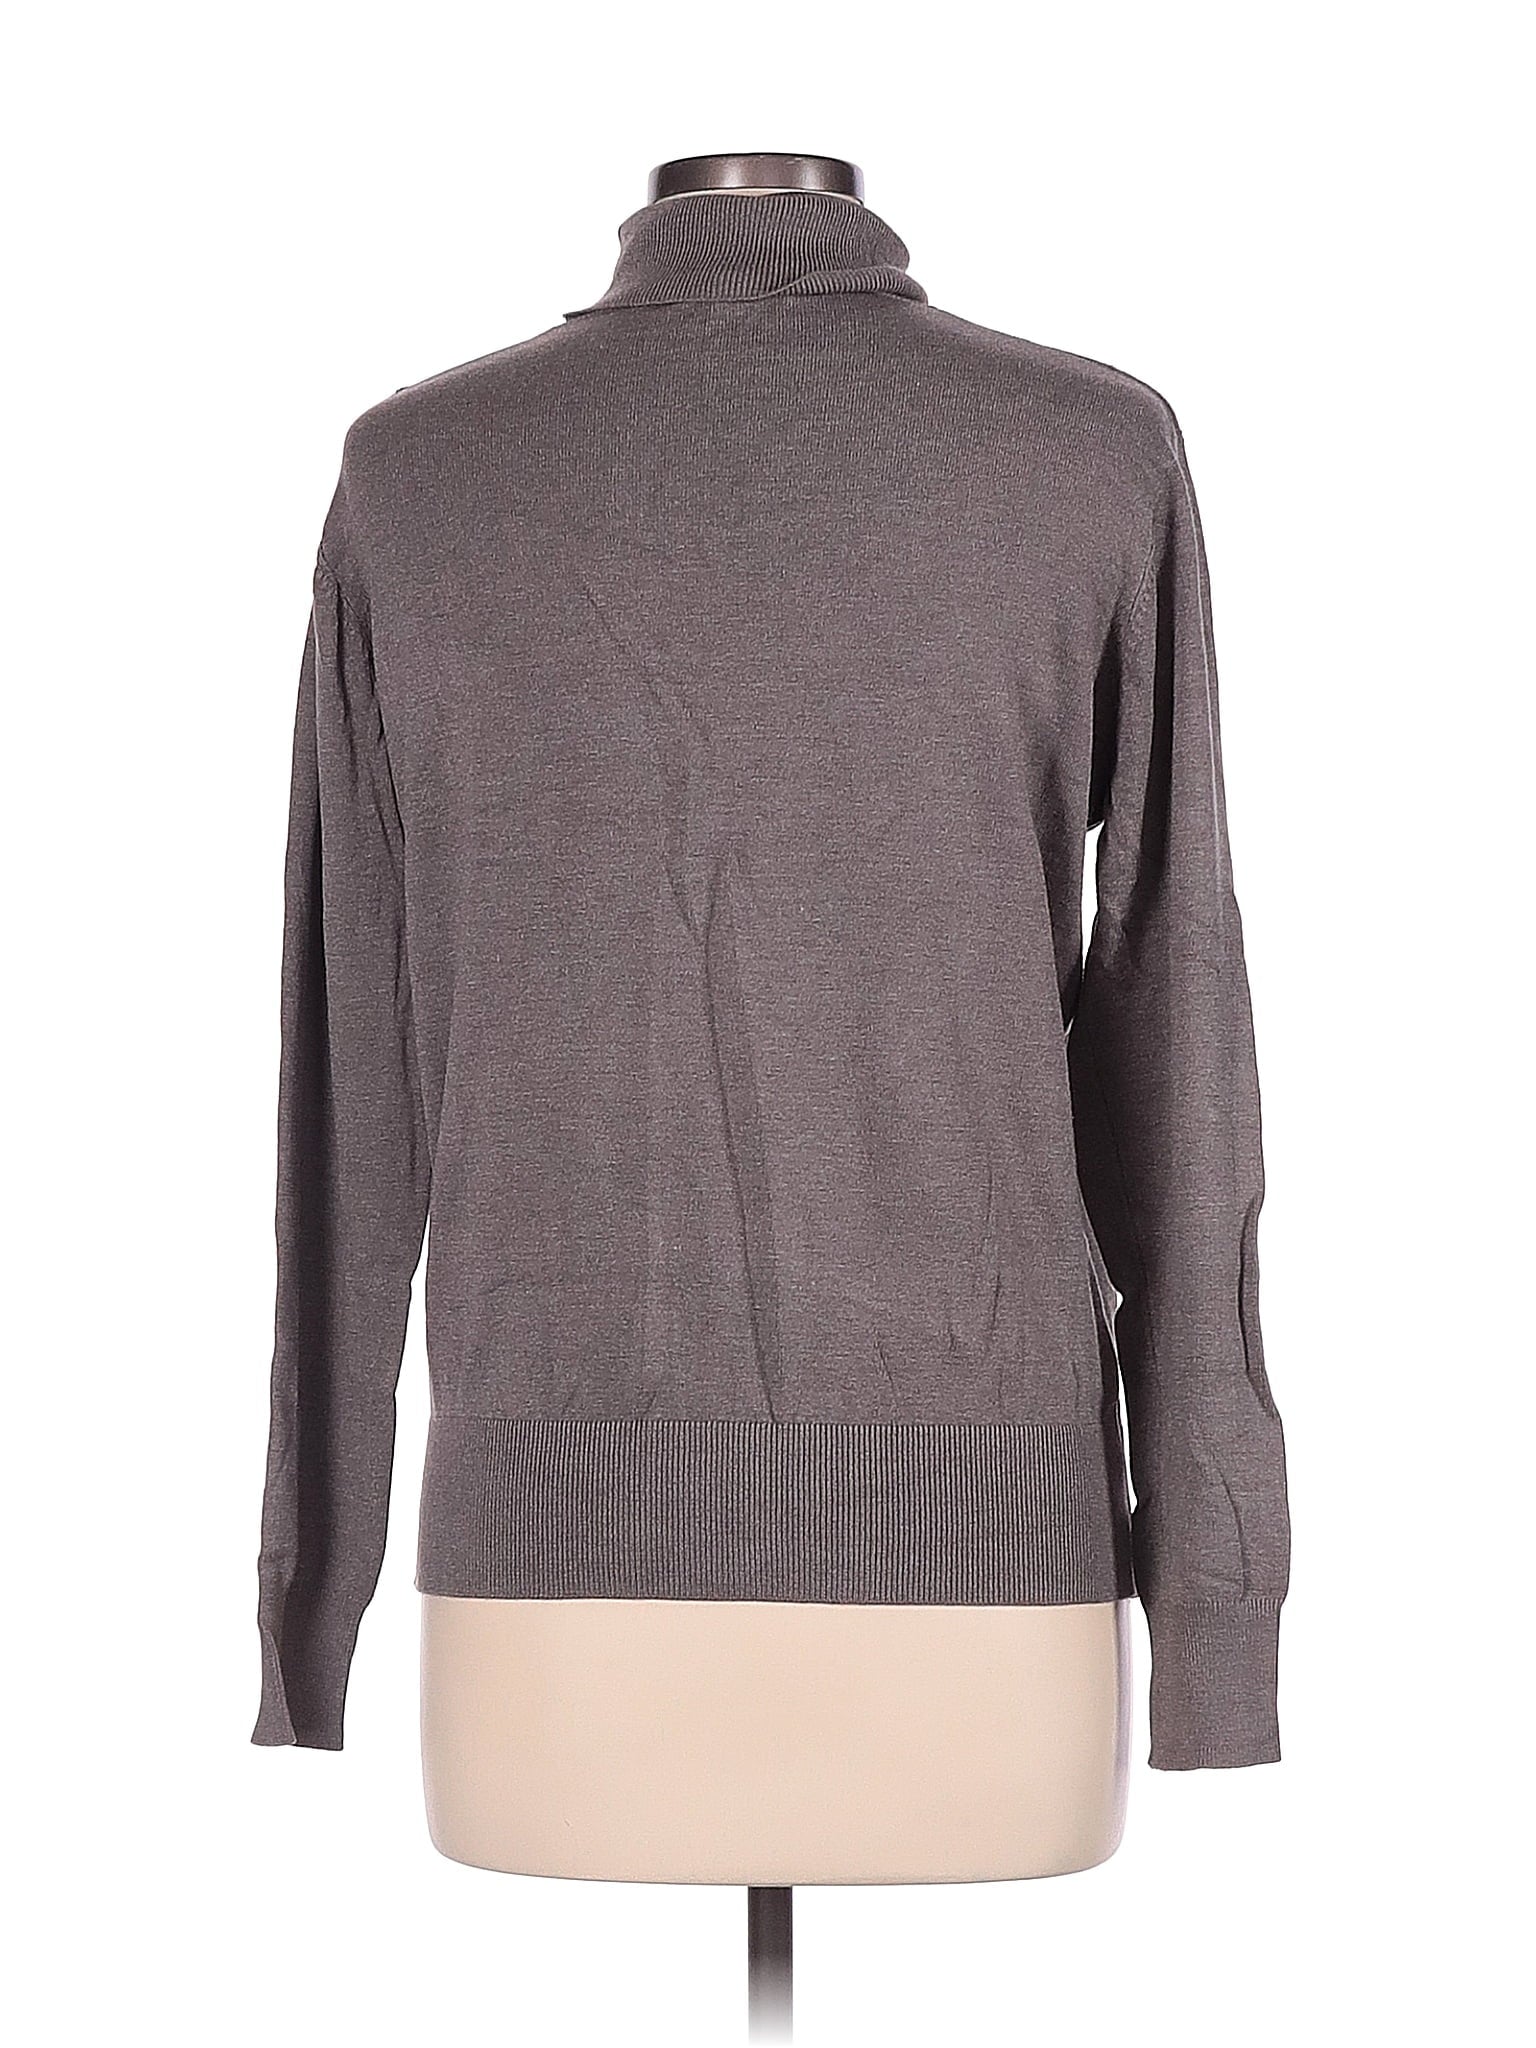 Turtleneck Sweater size - L